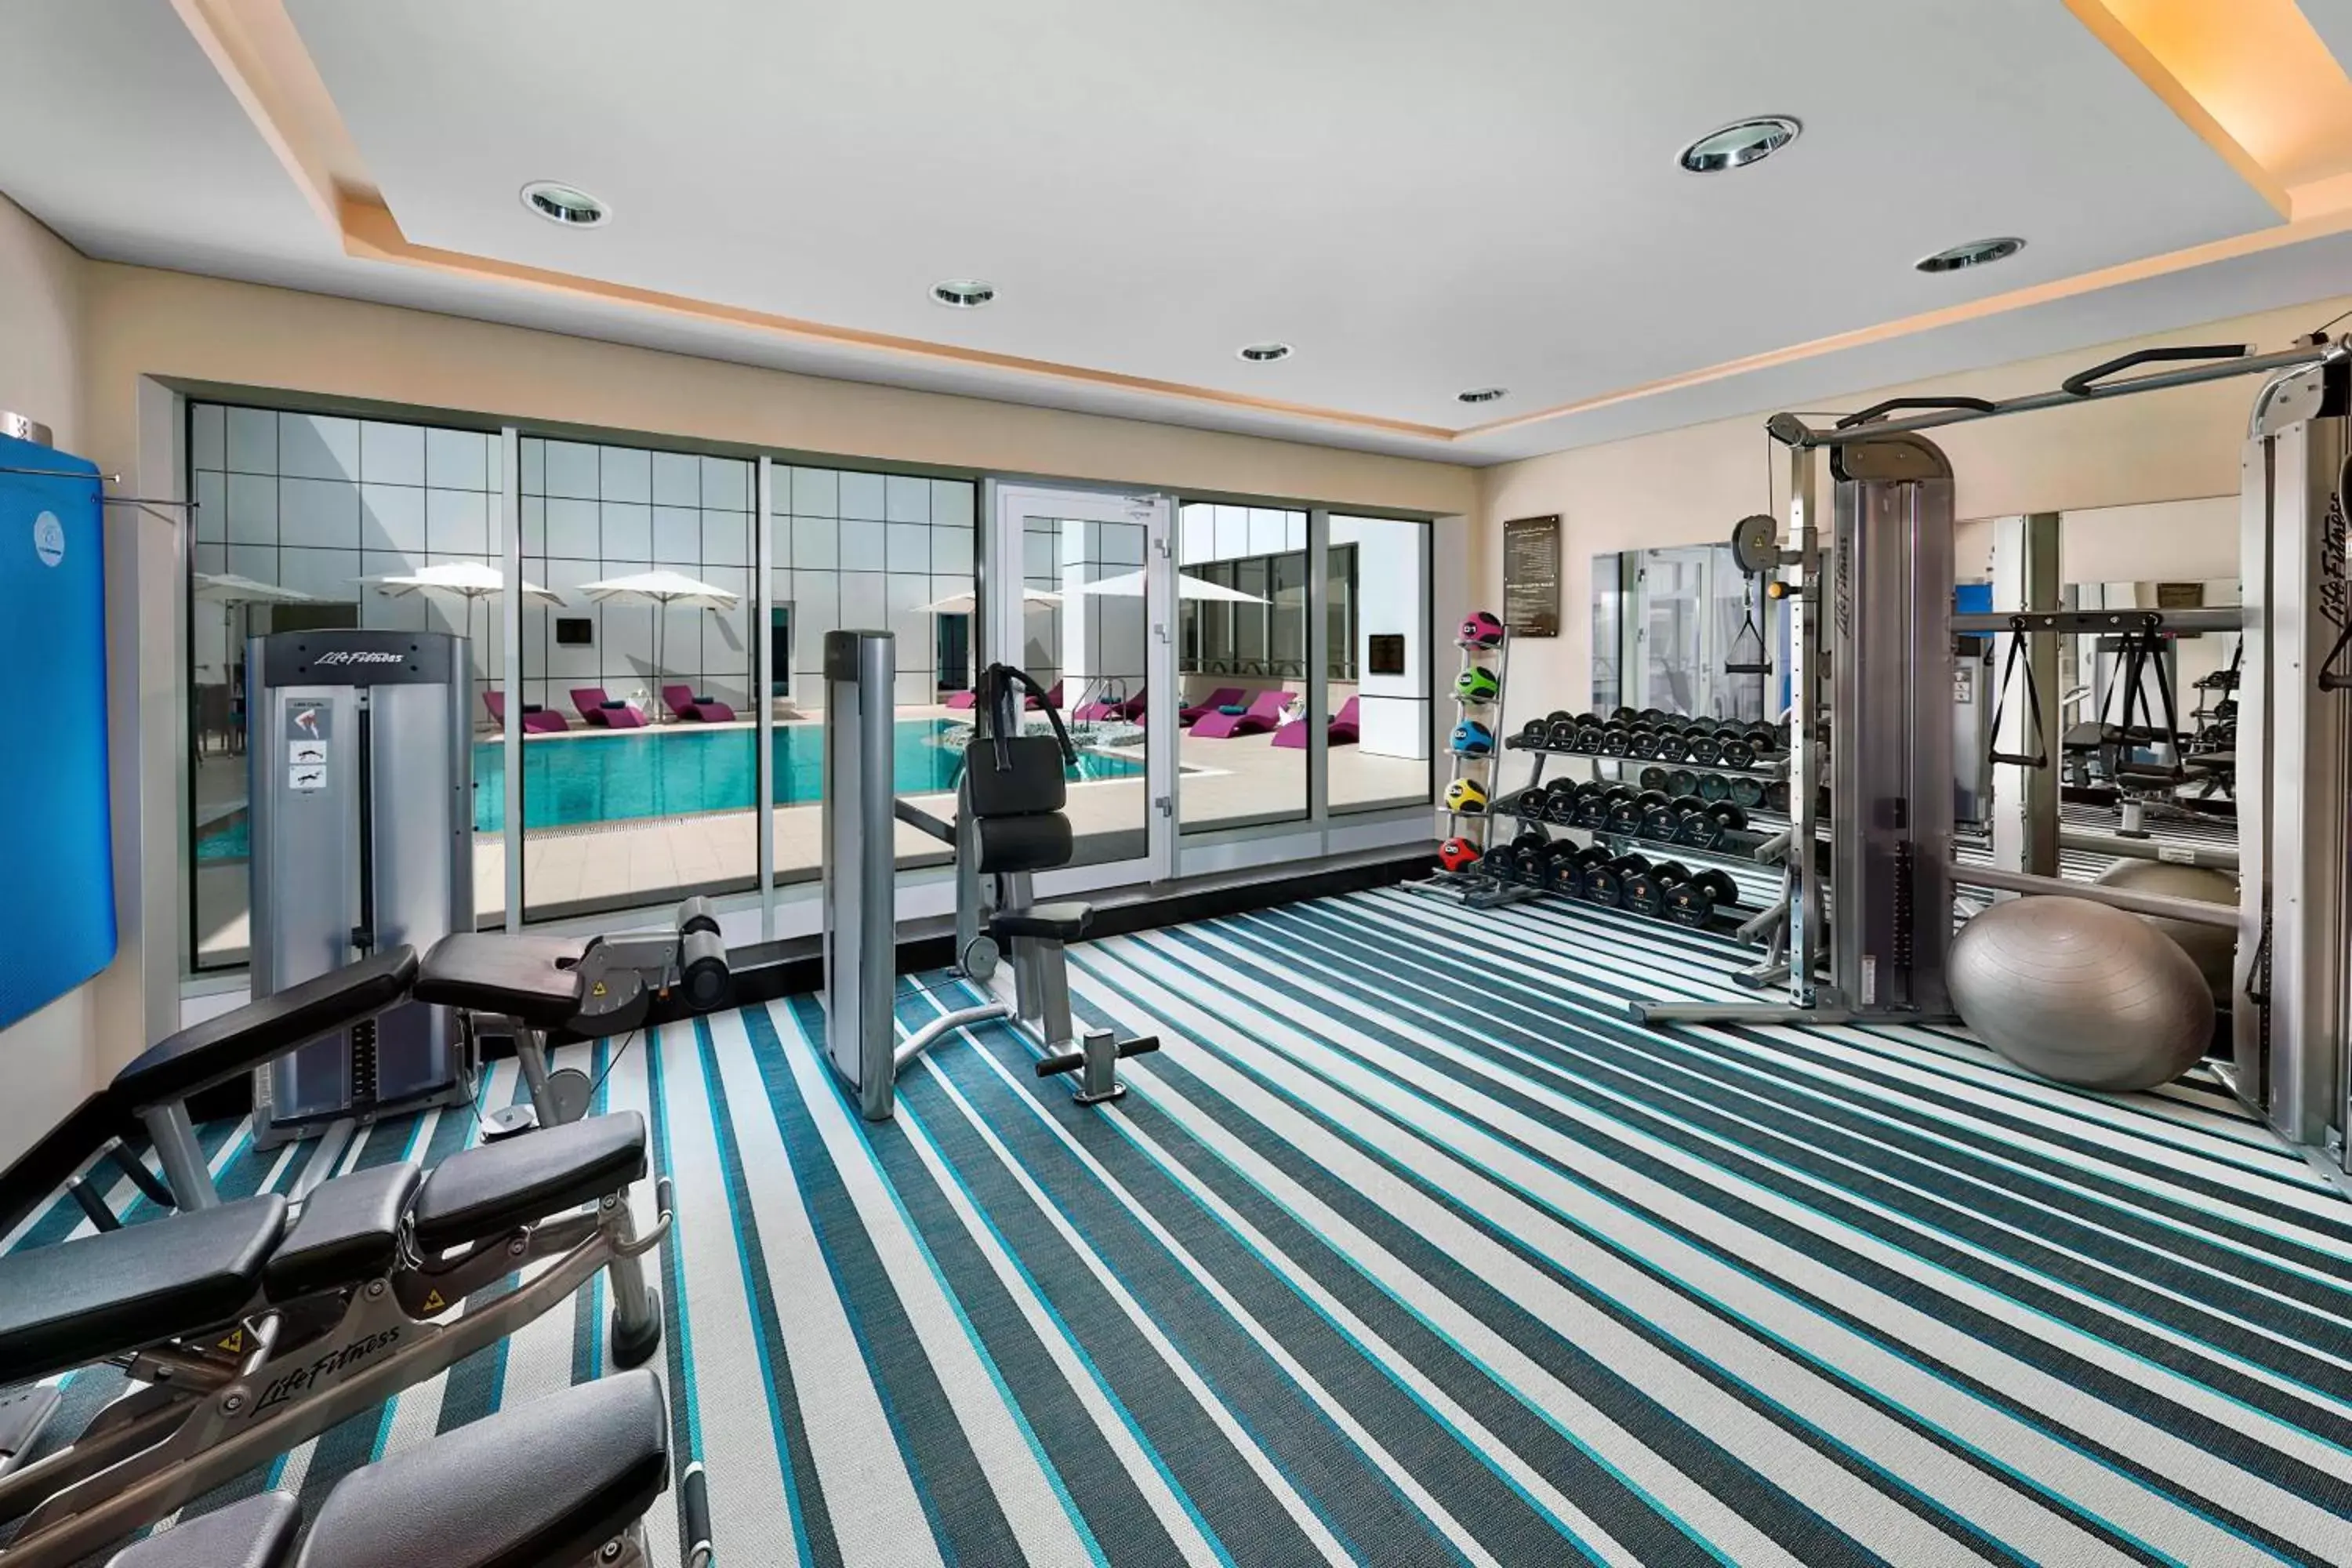 Fitness centre/facilities, Fitness Center/Facilities in Courtyard by Marriott Riyadh Olaya